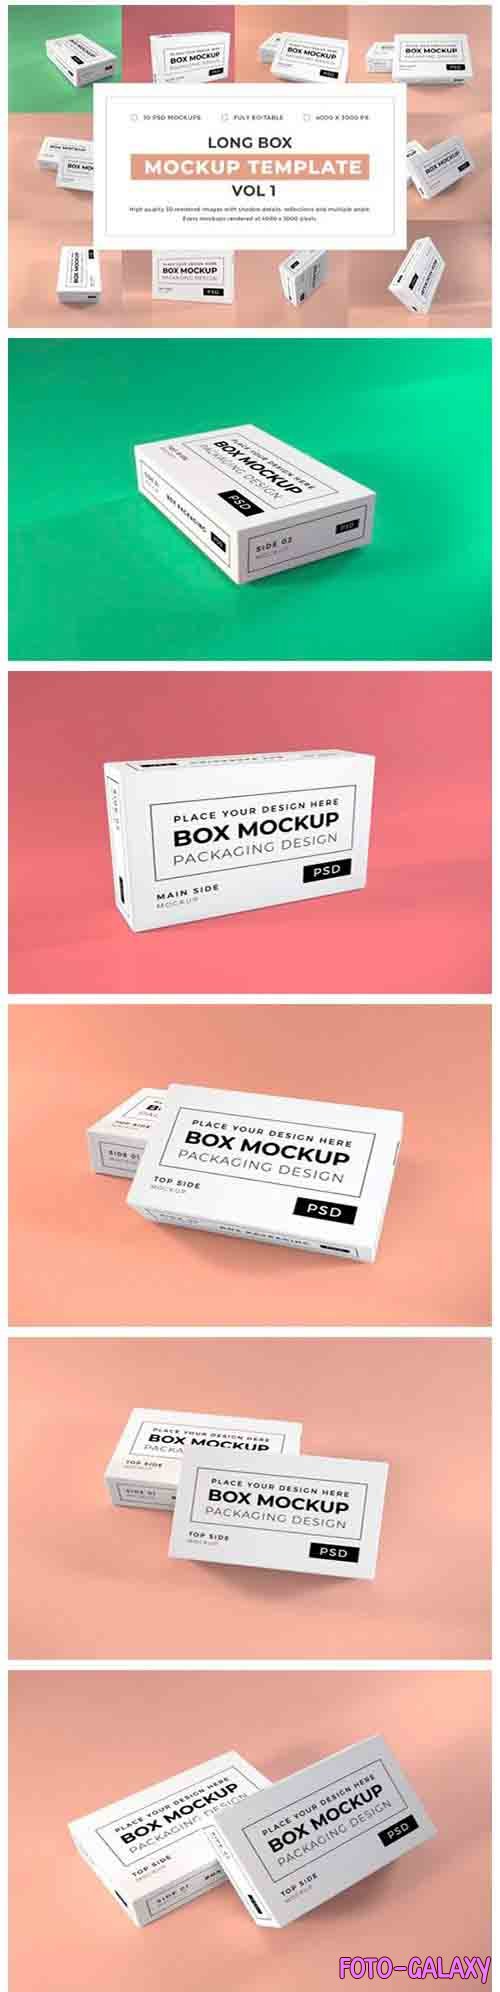 Long Box Packaging Mockup Template Bundle Vol 1 - 1053084